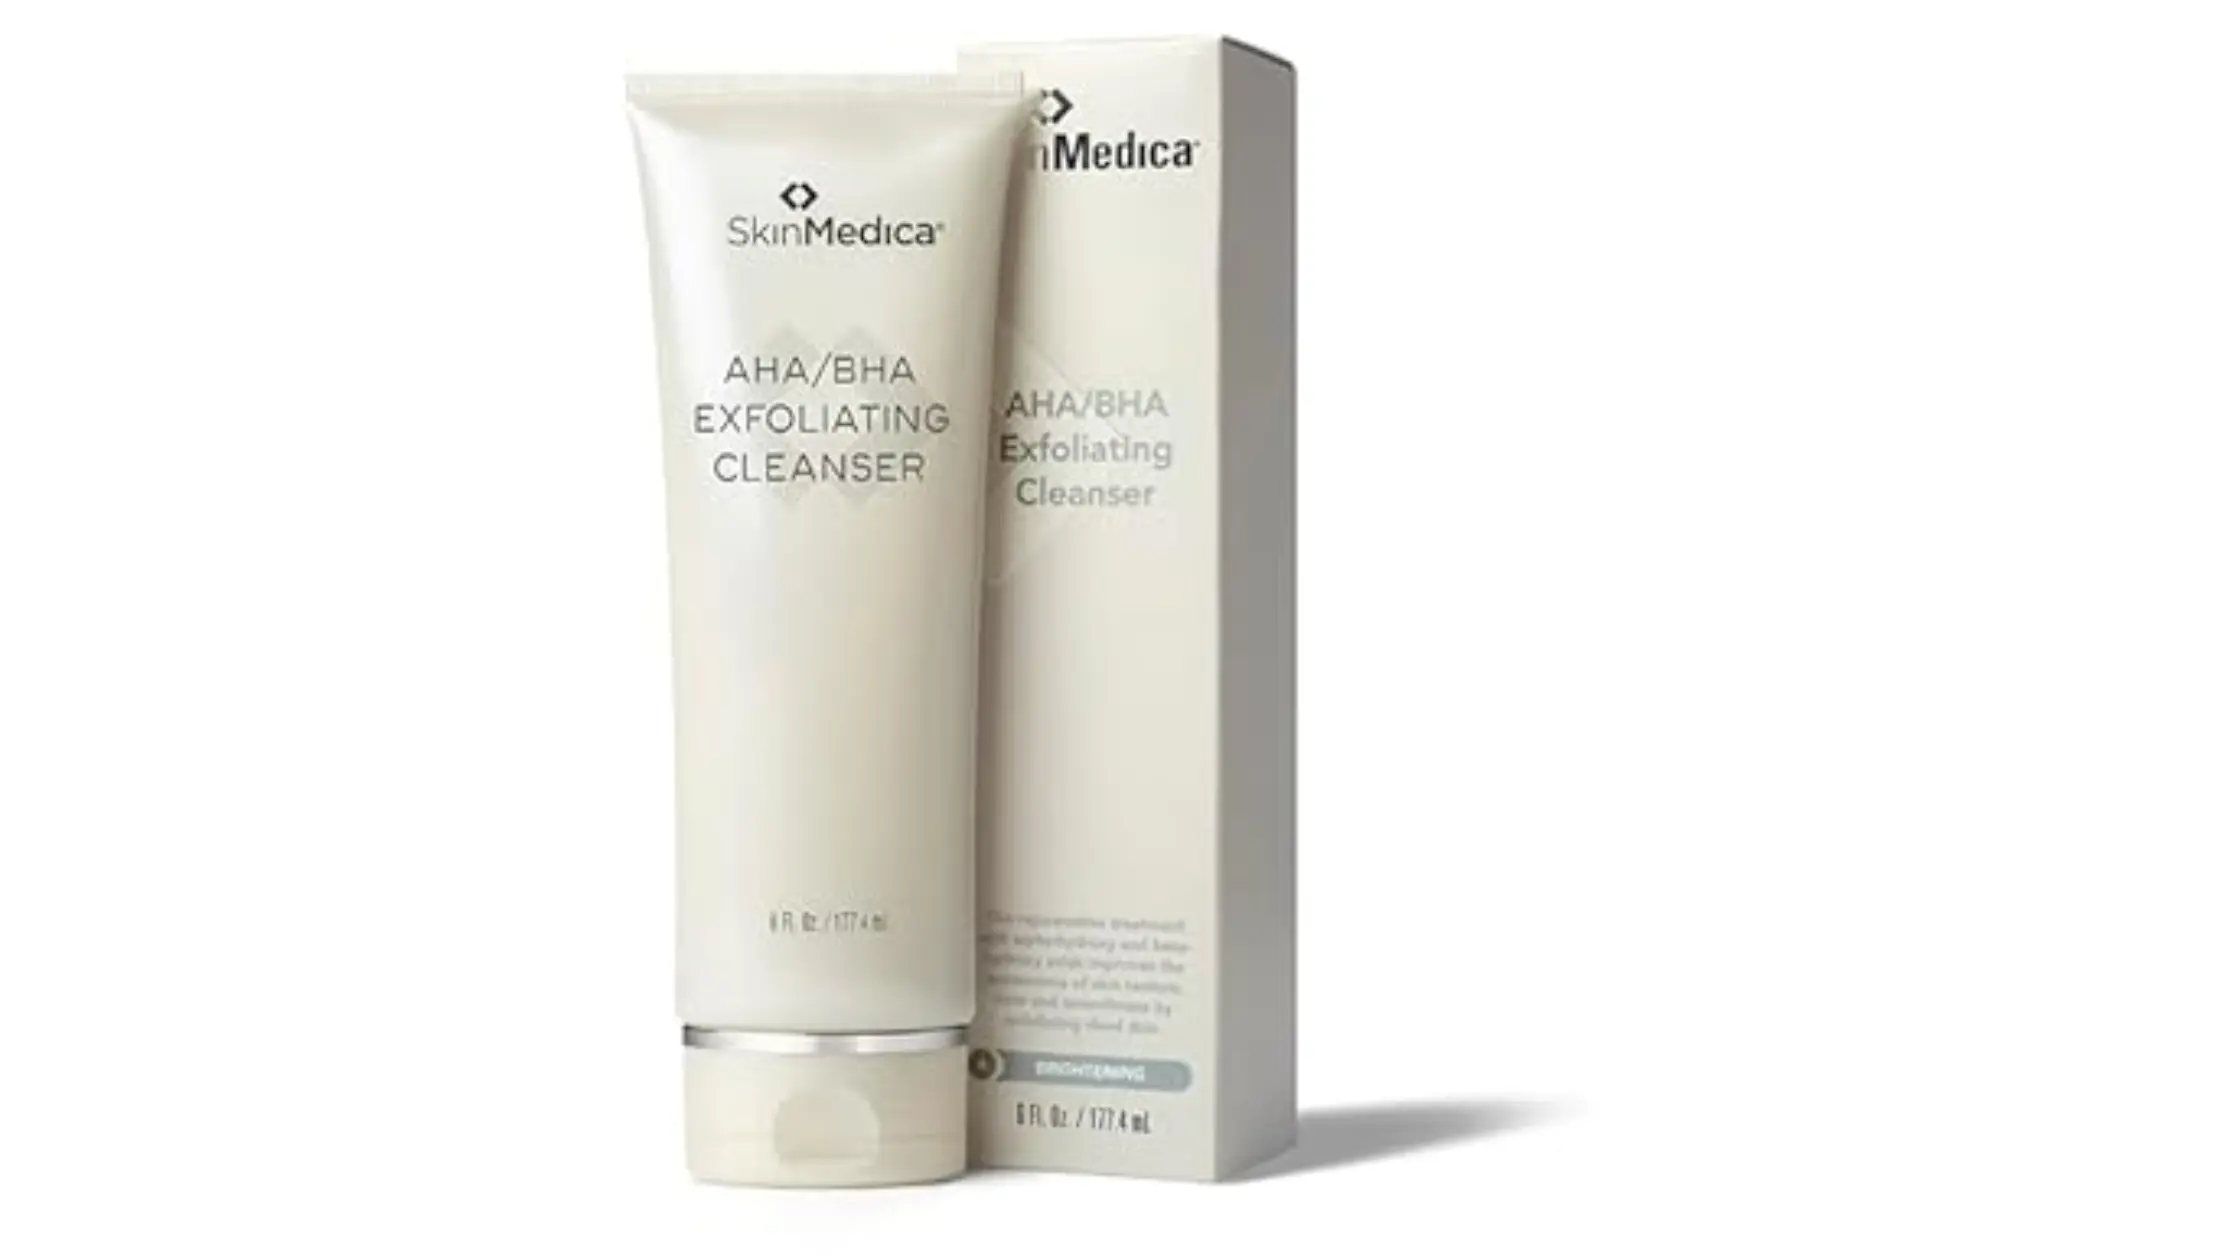 SkinMedica AHA/BHA Exfoliating Cleanser Review